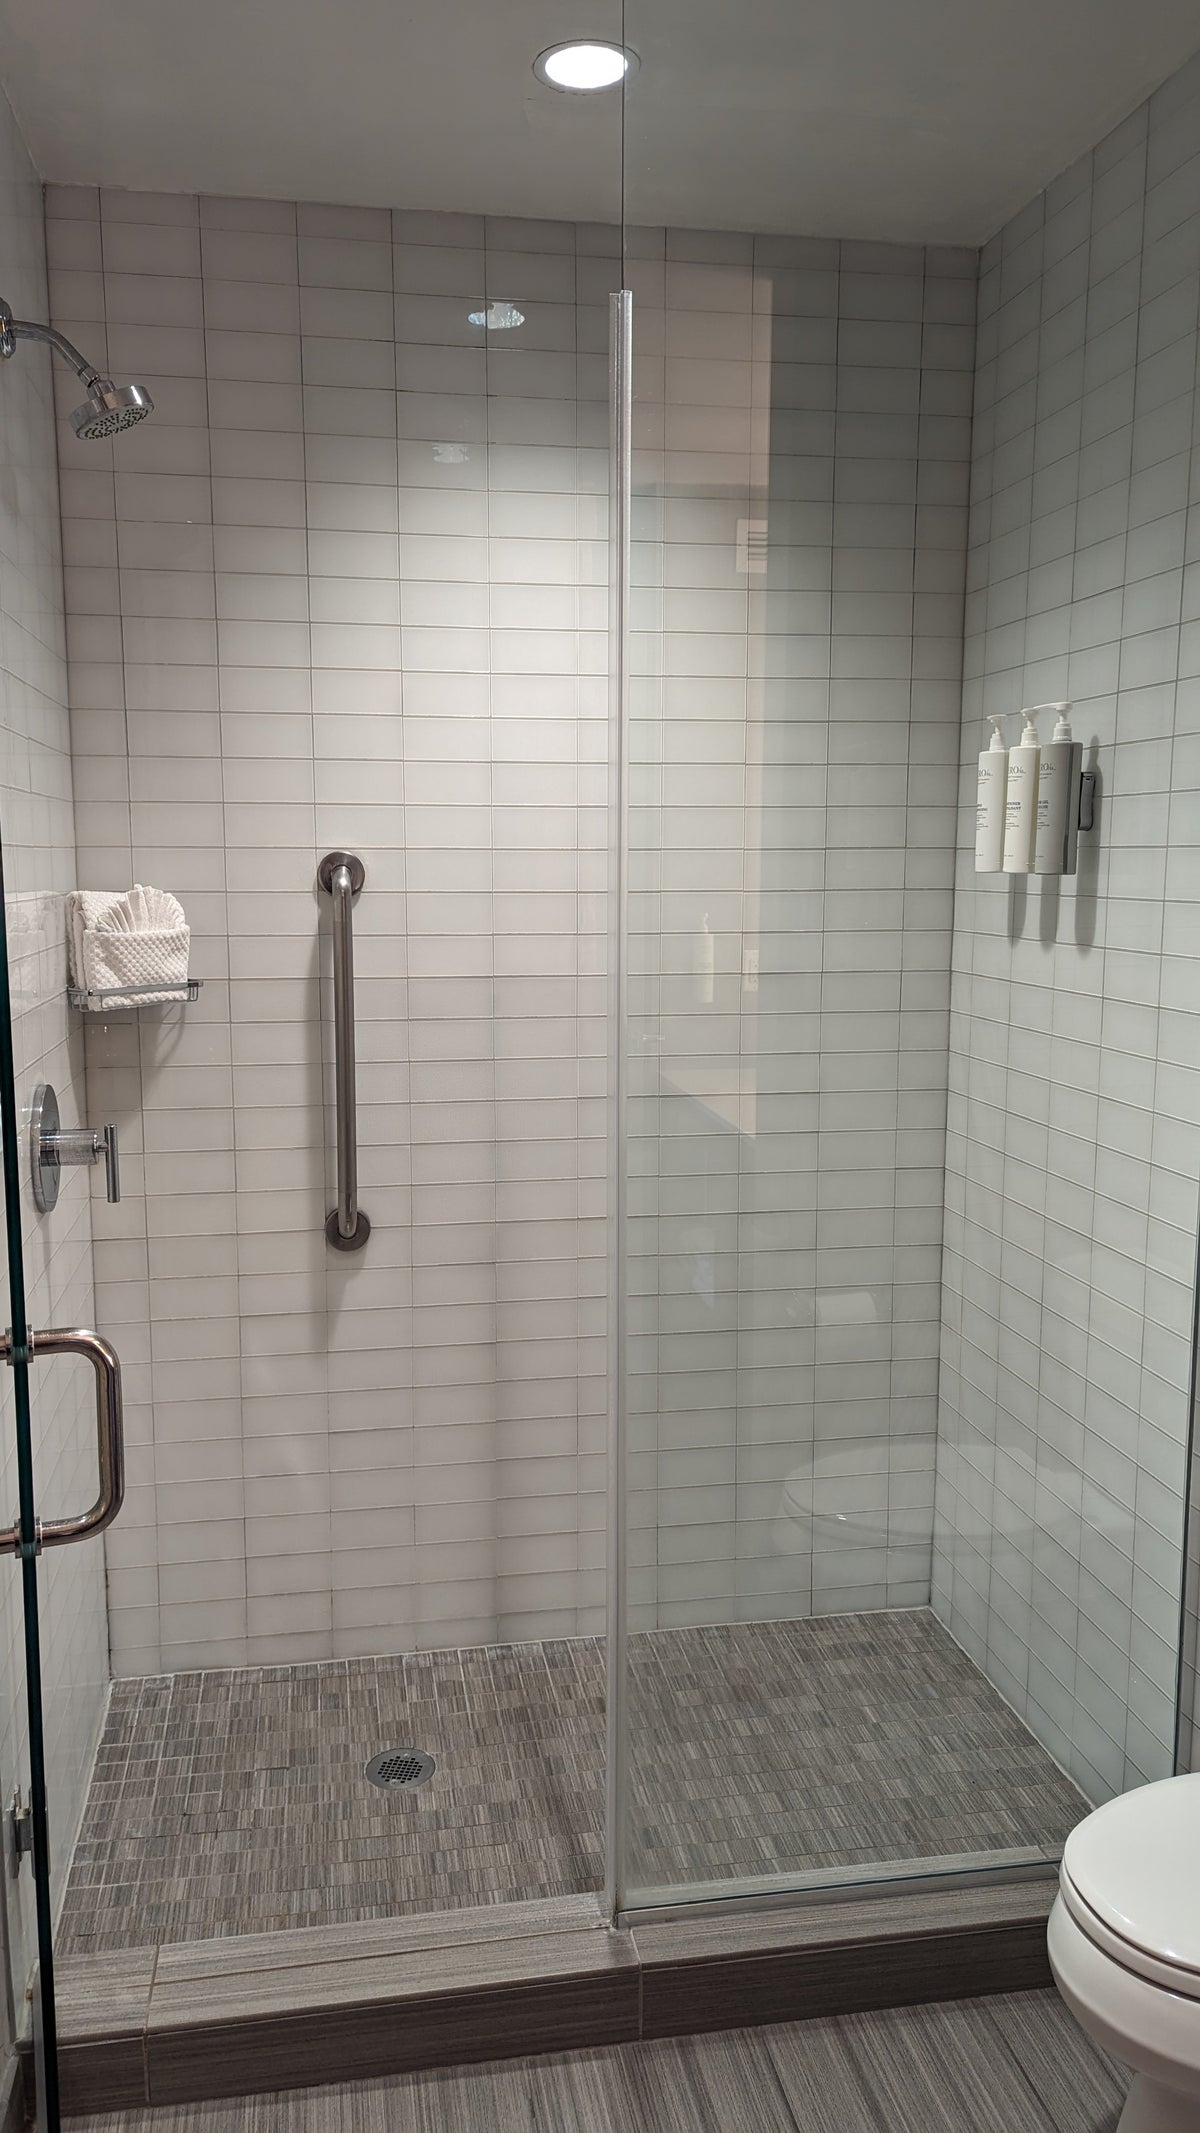 Embassy Suites by Hilton The Woodlands at Hughes Landing room bathroom shower 